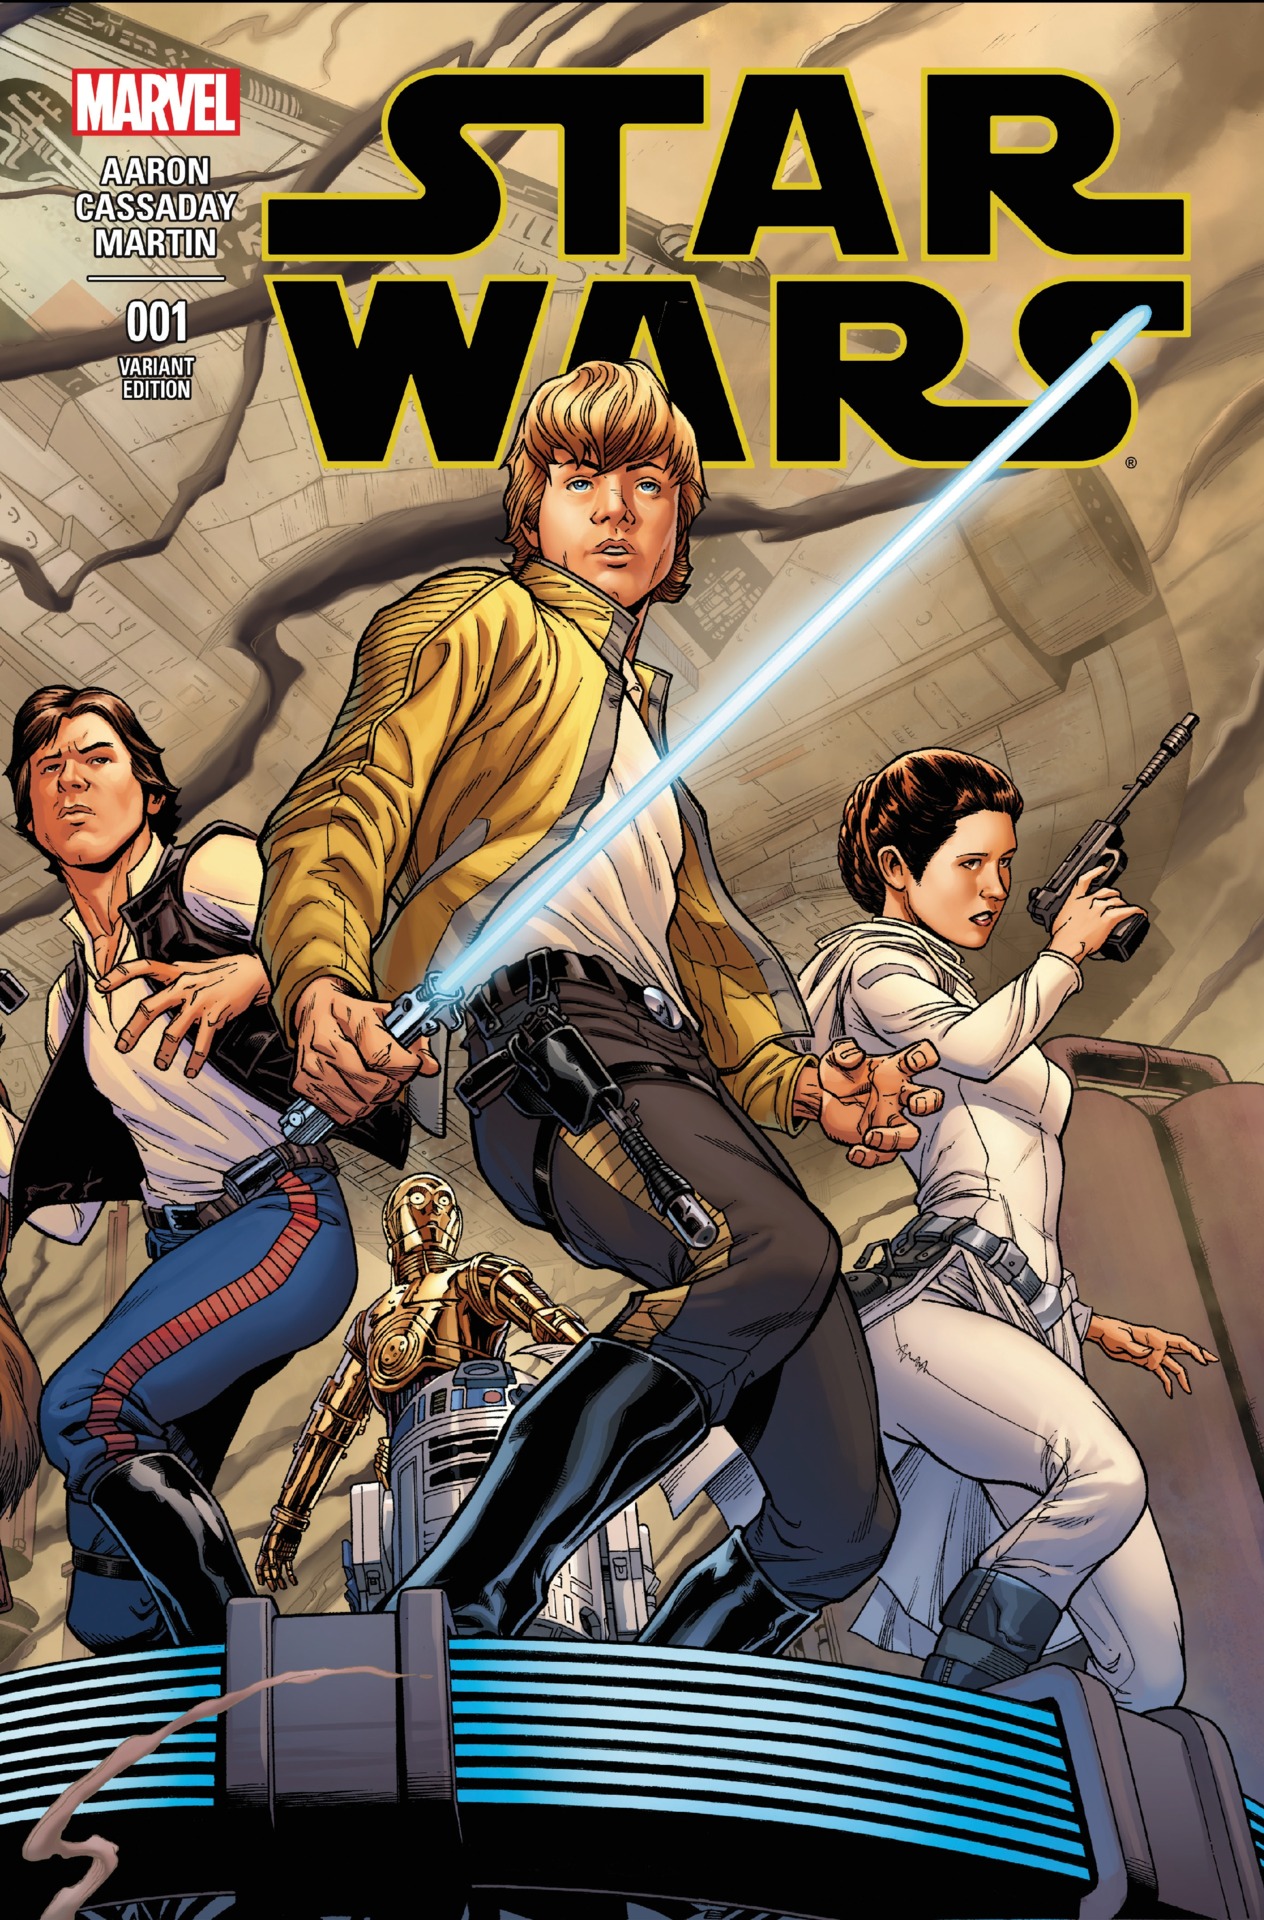 Комиксы Звездные войны. Звездные войны комикс том 1. Marvel Star Wars Cover Art. Комикс Star Wars Marvel 001 variant Edition.